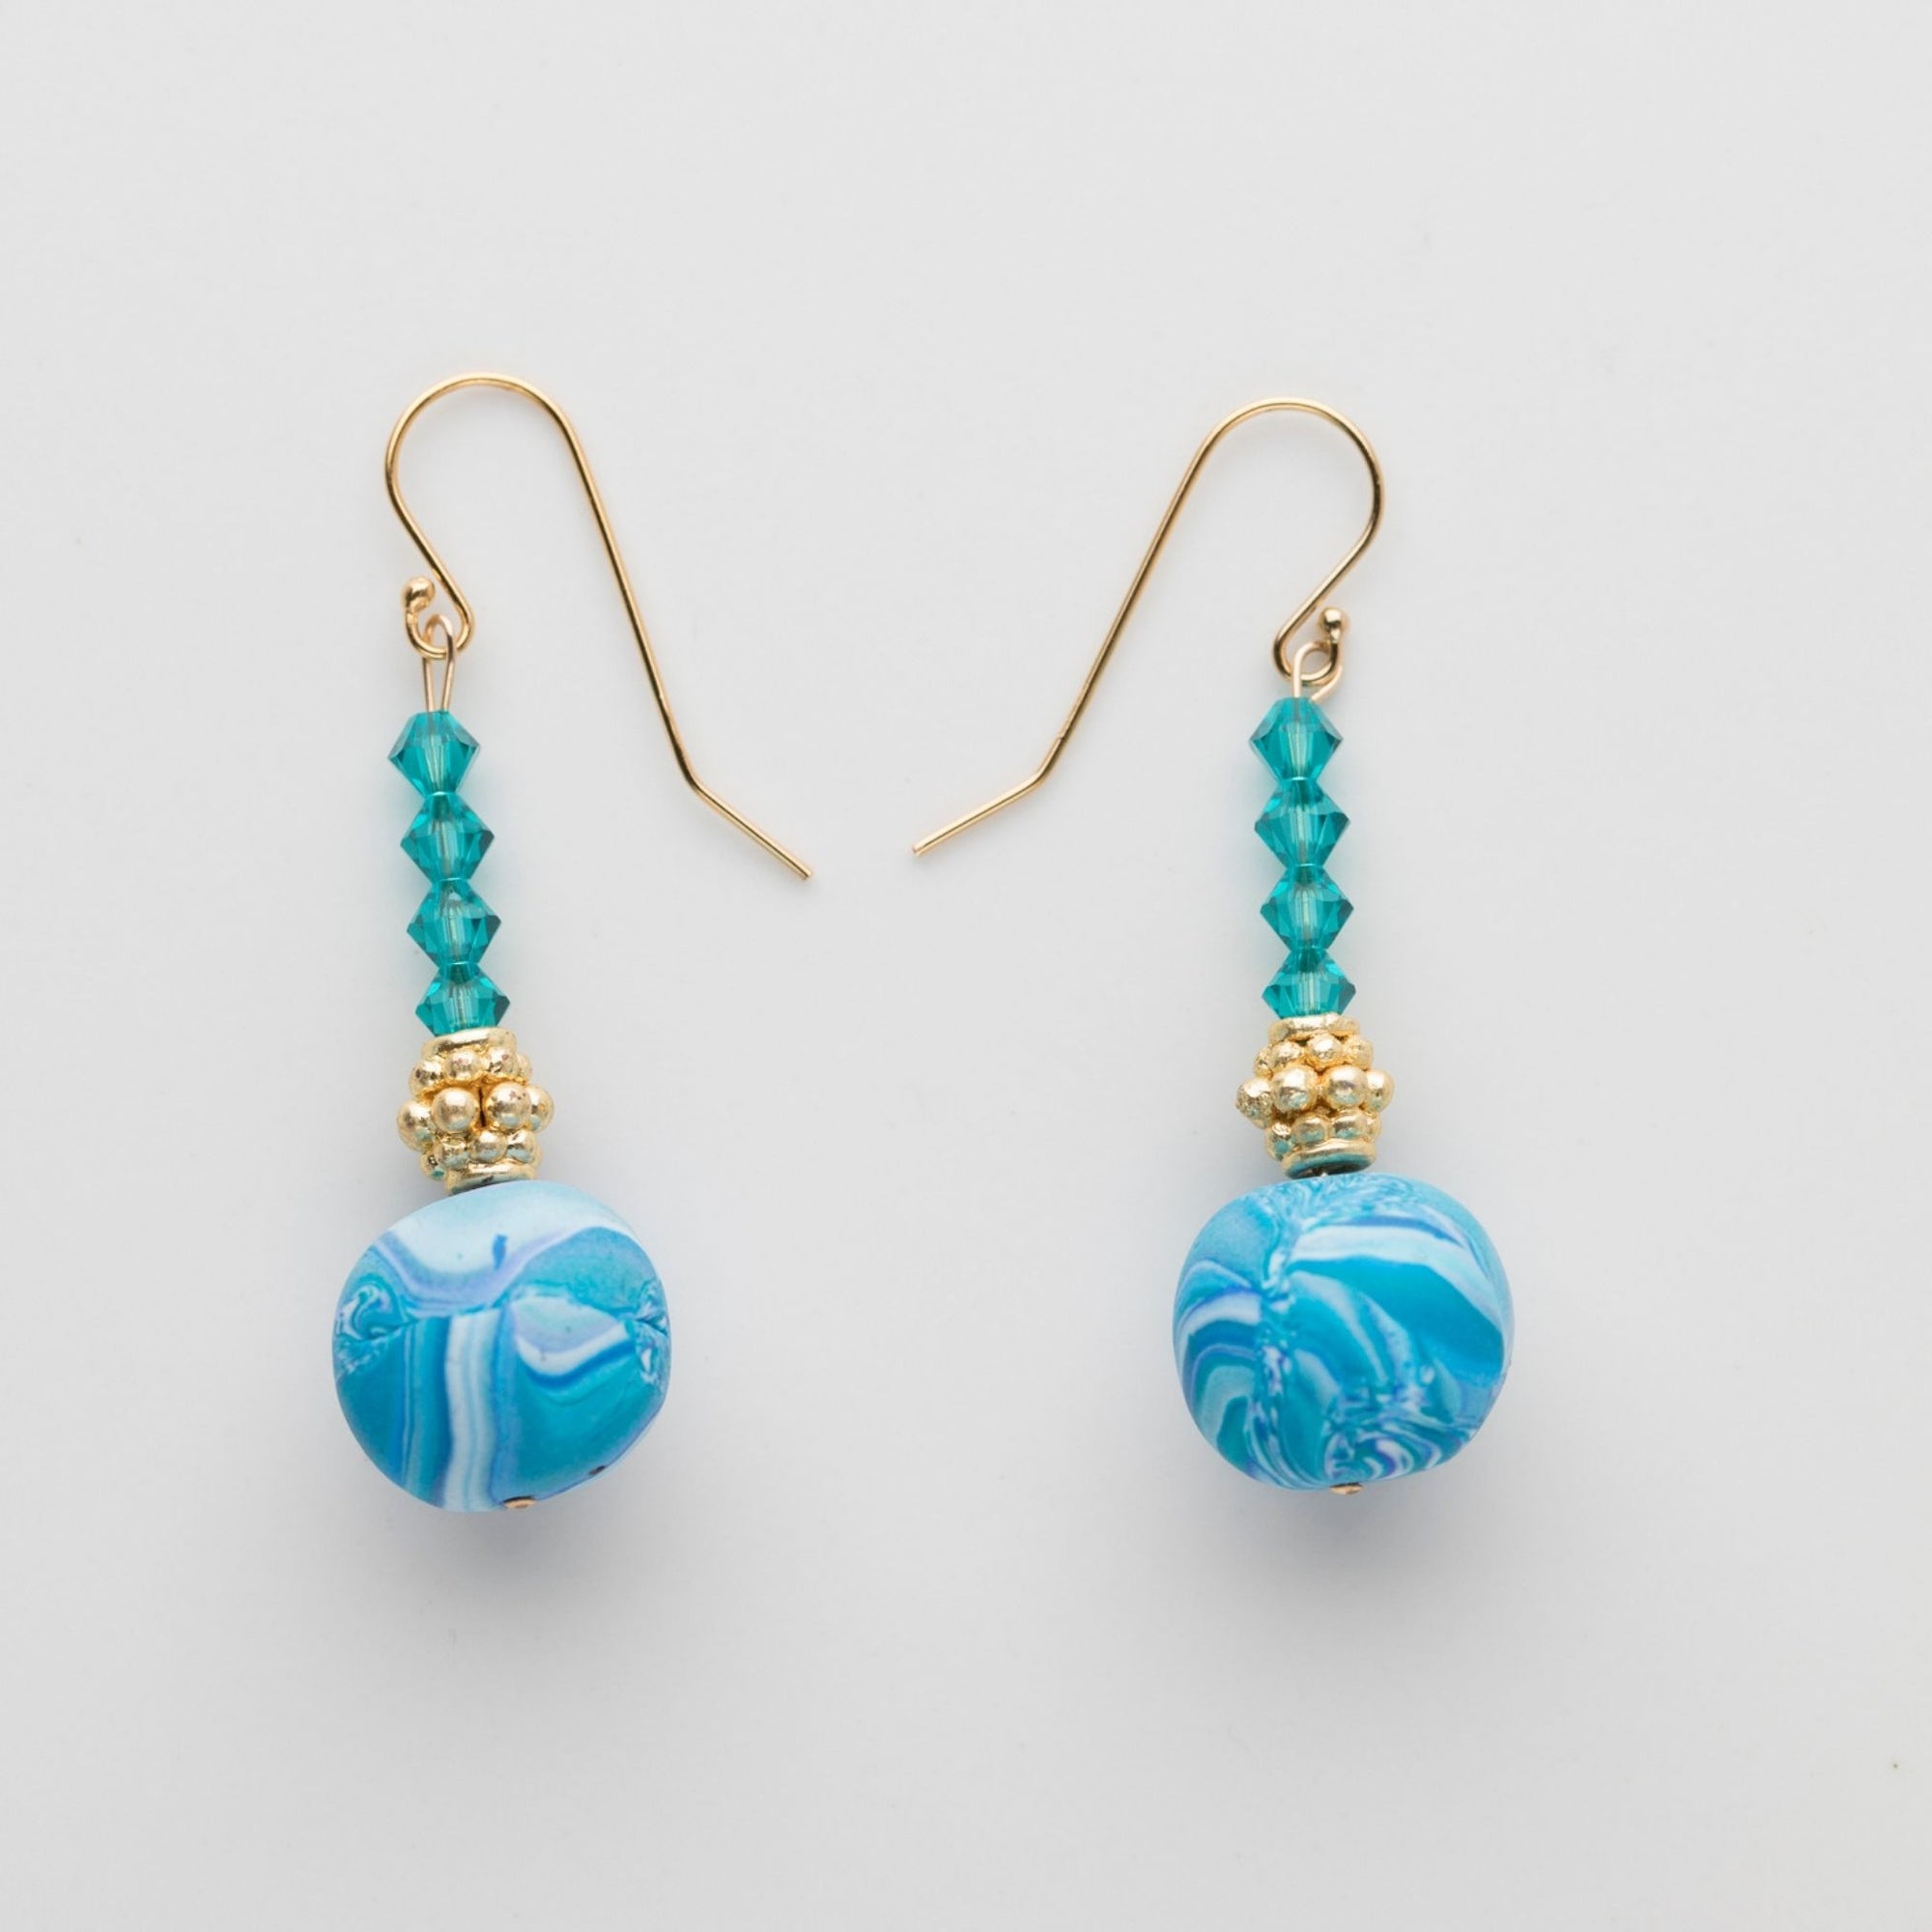 SHOP Bespoke Earrings featuring Handmade Beads by Marina-ra Designs